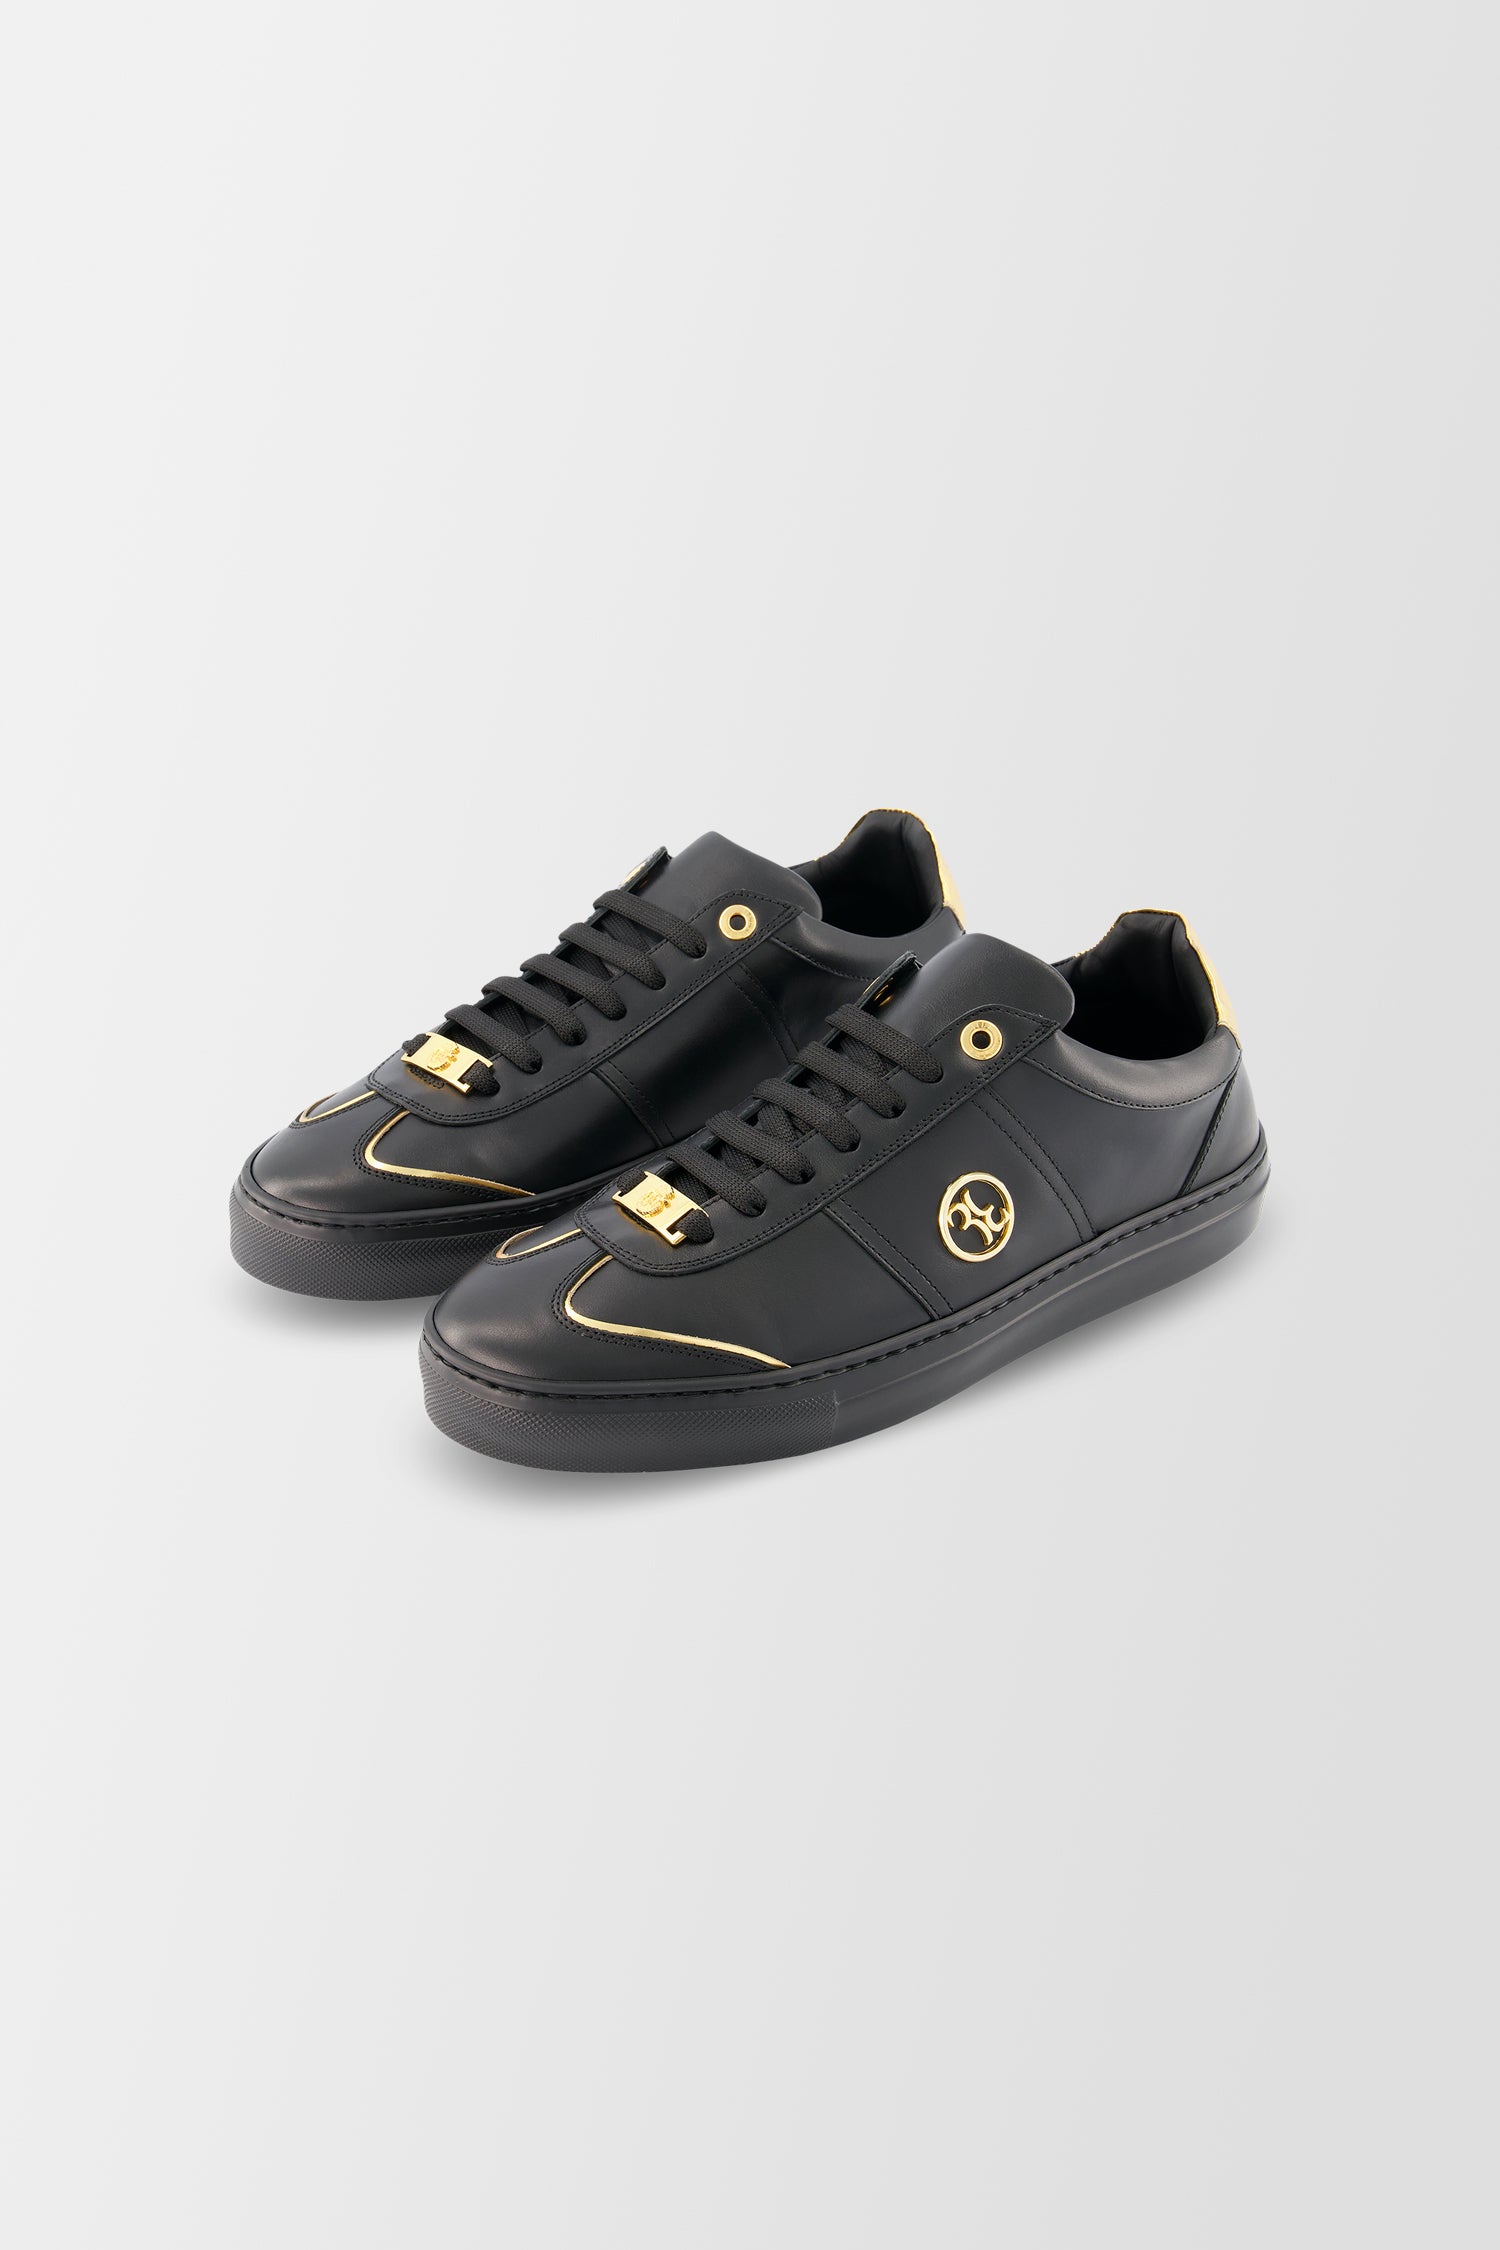 Billionaire Black/Gold Sneakers